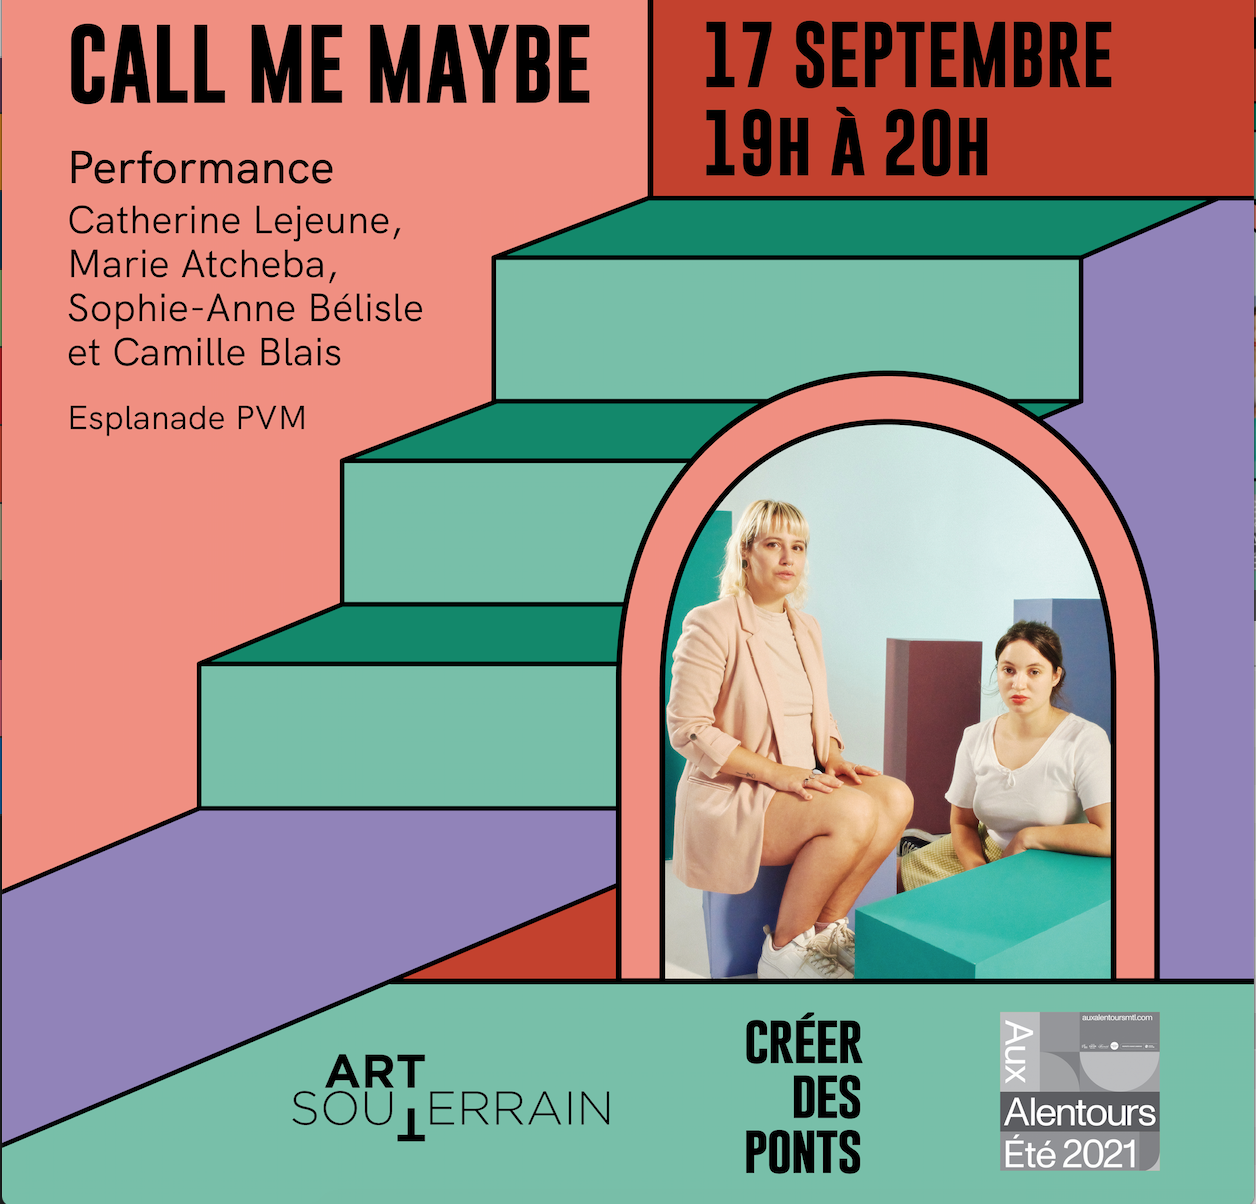 CALL ME MAYBE: Performance Catherine Lejeune, Marie Atcheba, Sophie-Anne Bélisle et Camille Blais